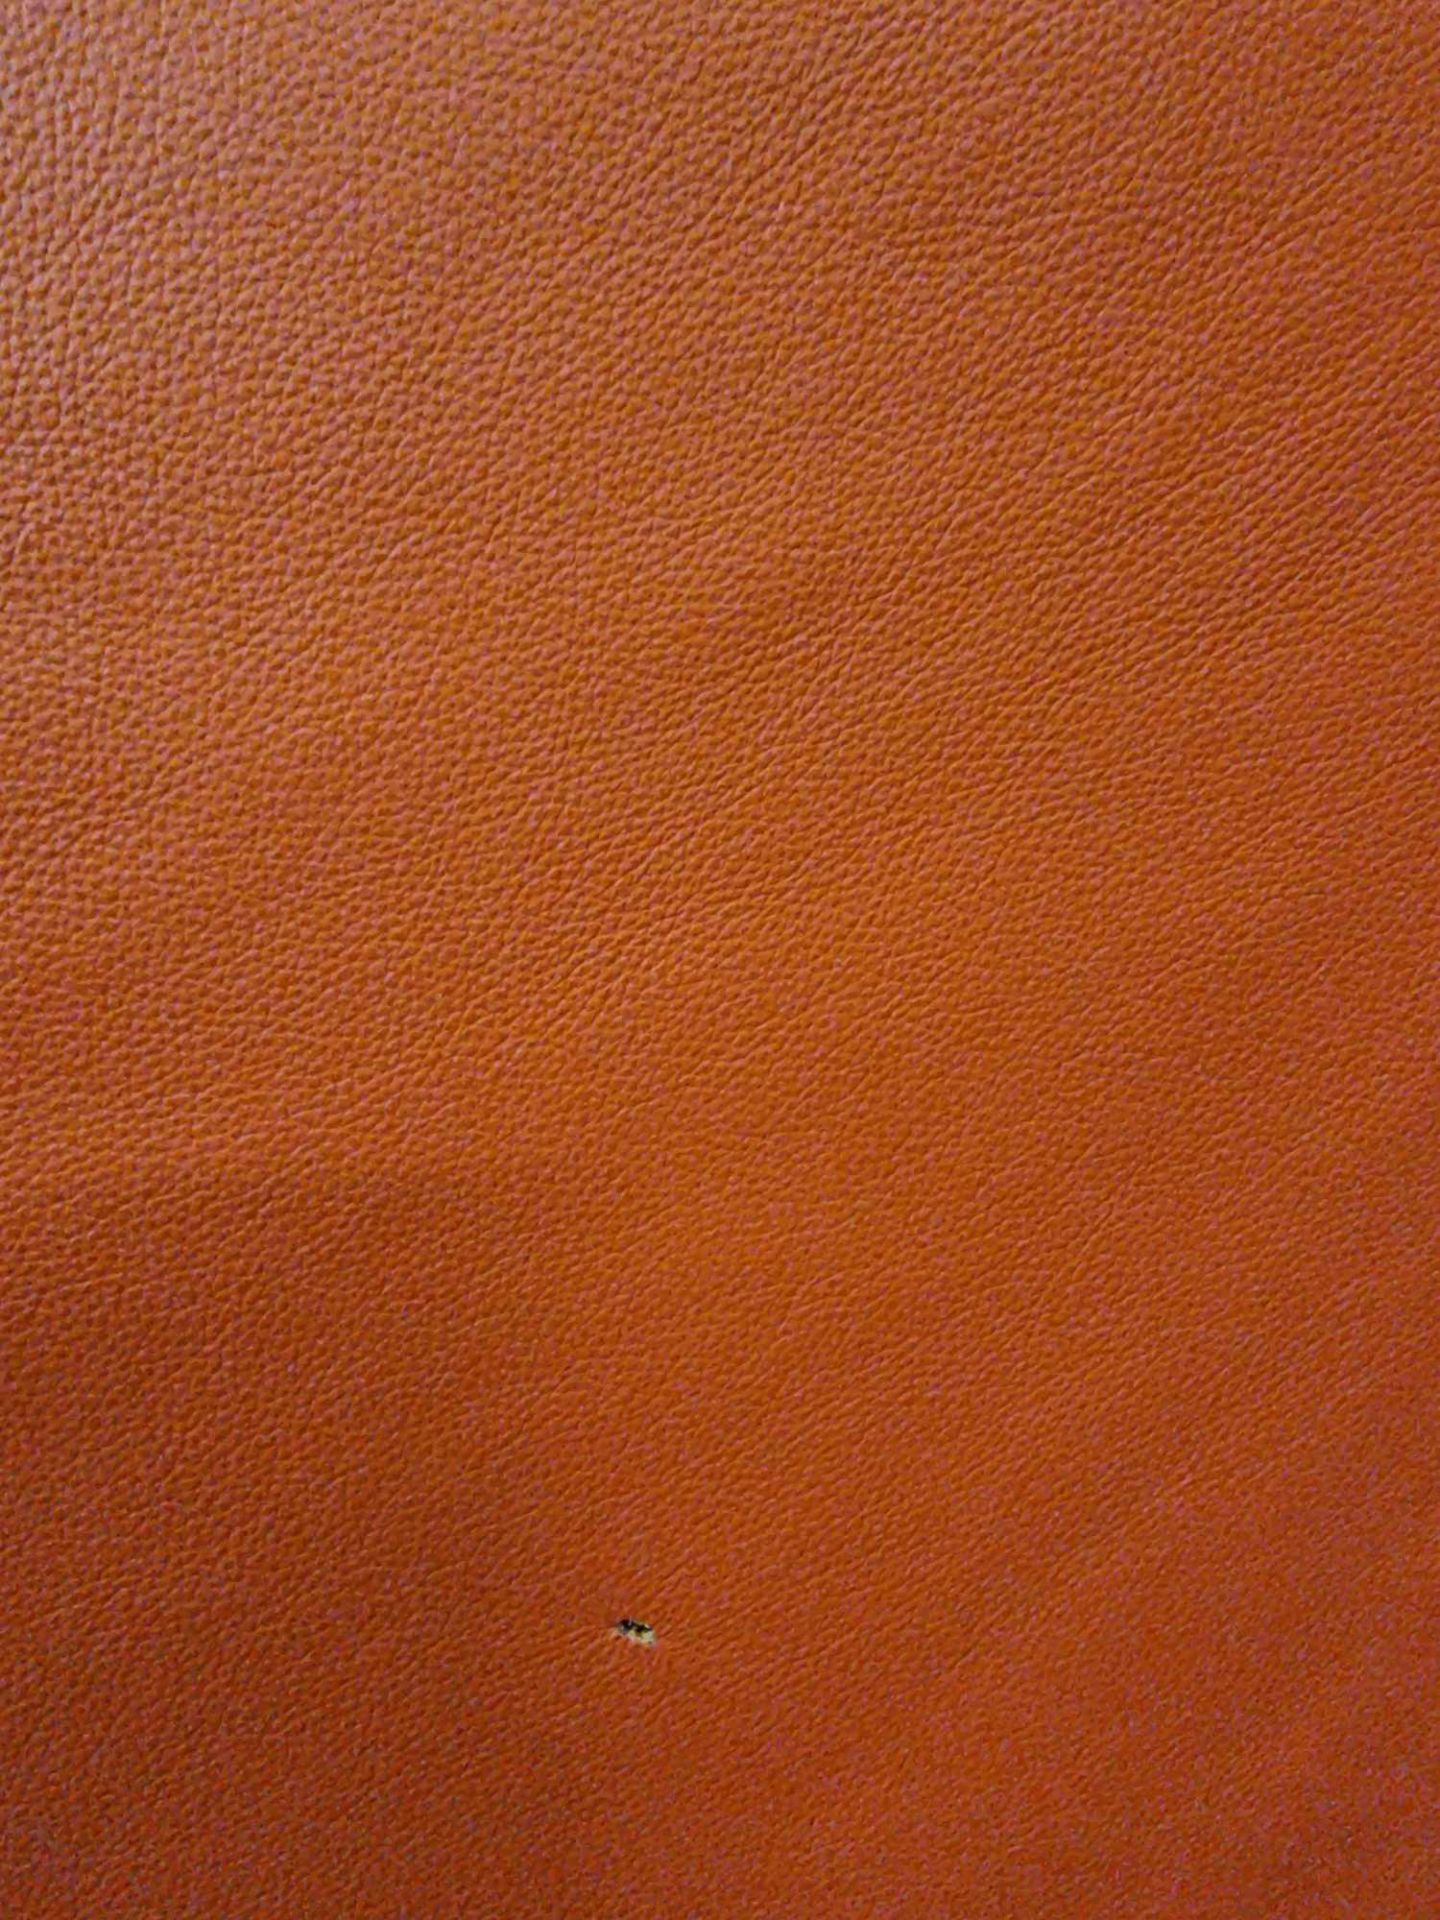 Prescott Red Orange Leather Hide approximately 2.31mÂ² 2.1 x 1.1cm ( Hide No,154) - Image 2 of 3